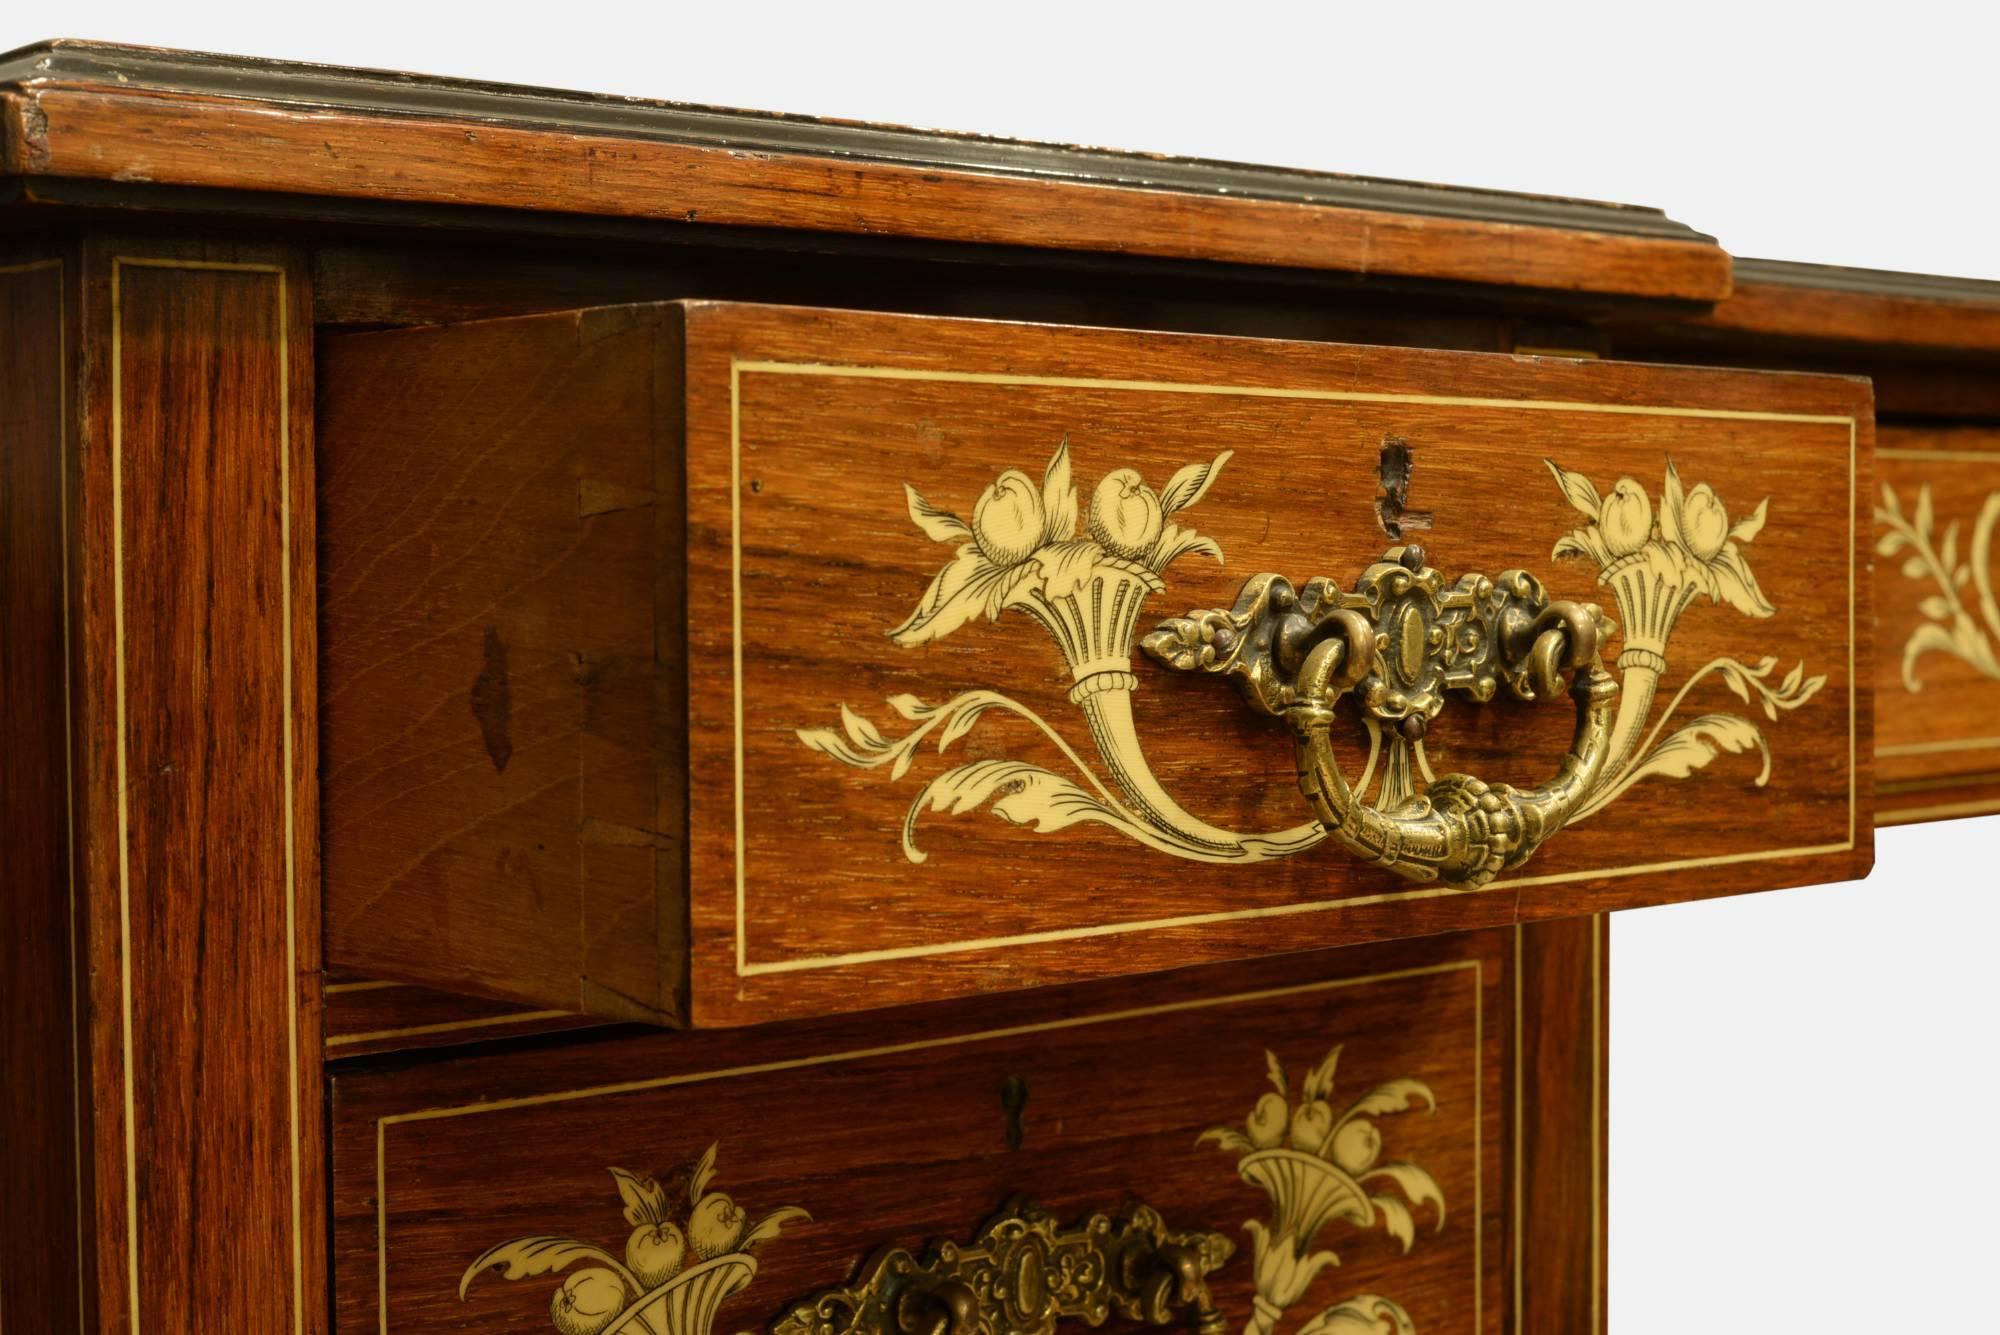 A mahogany inlaid ladies kneehole desk
circa 1910.